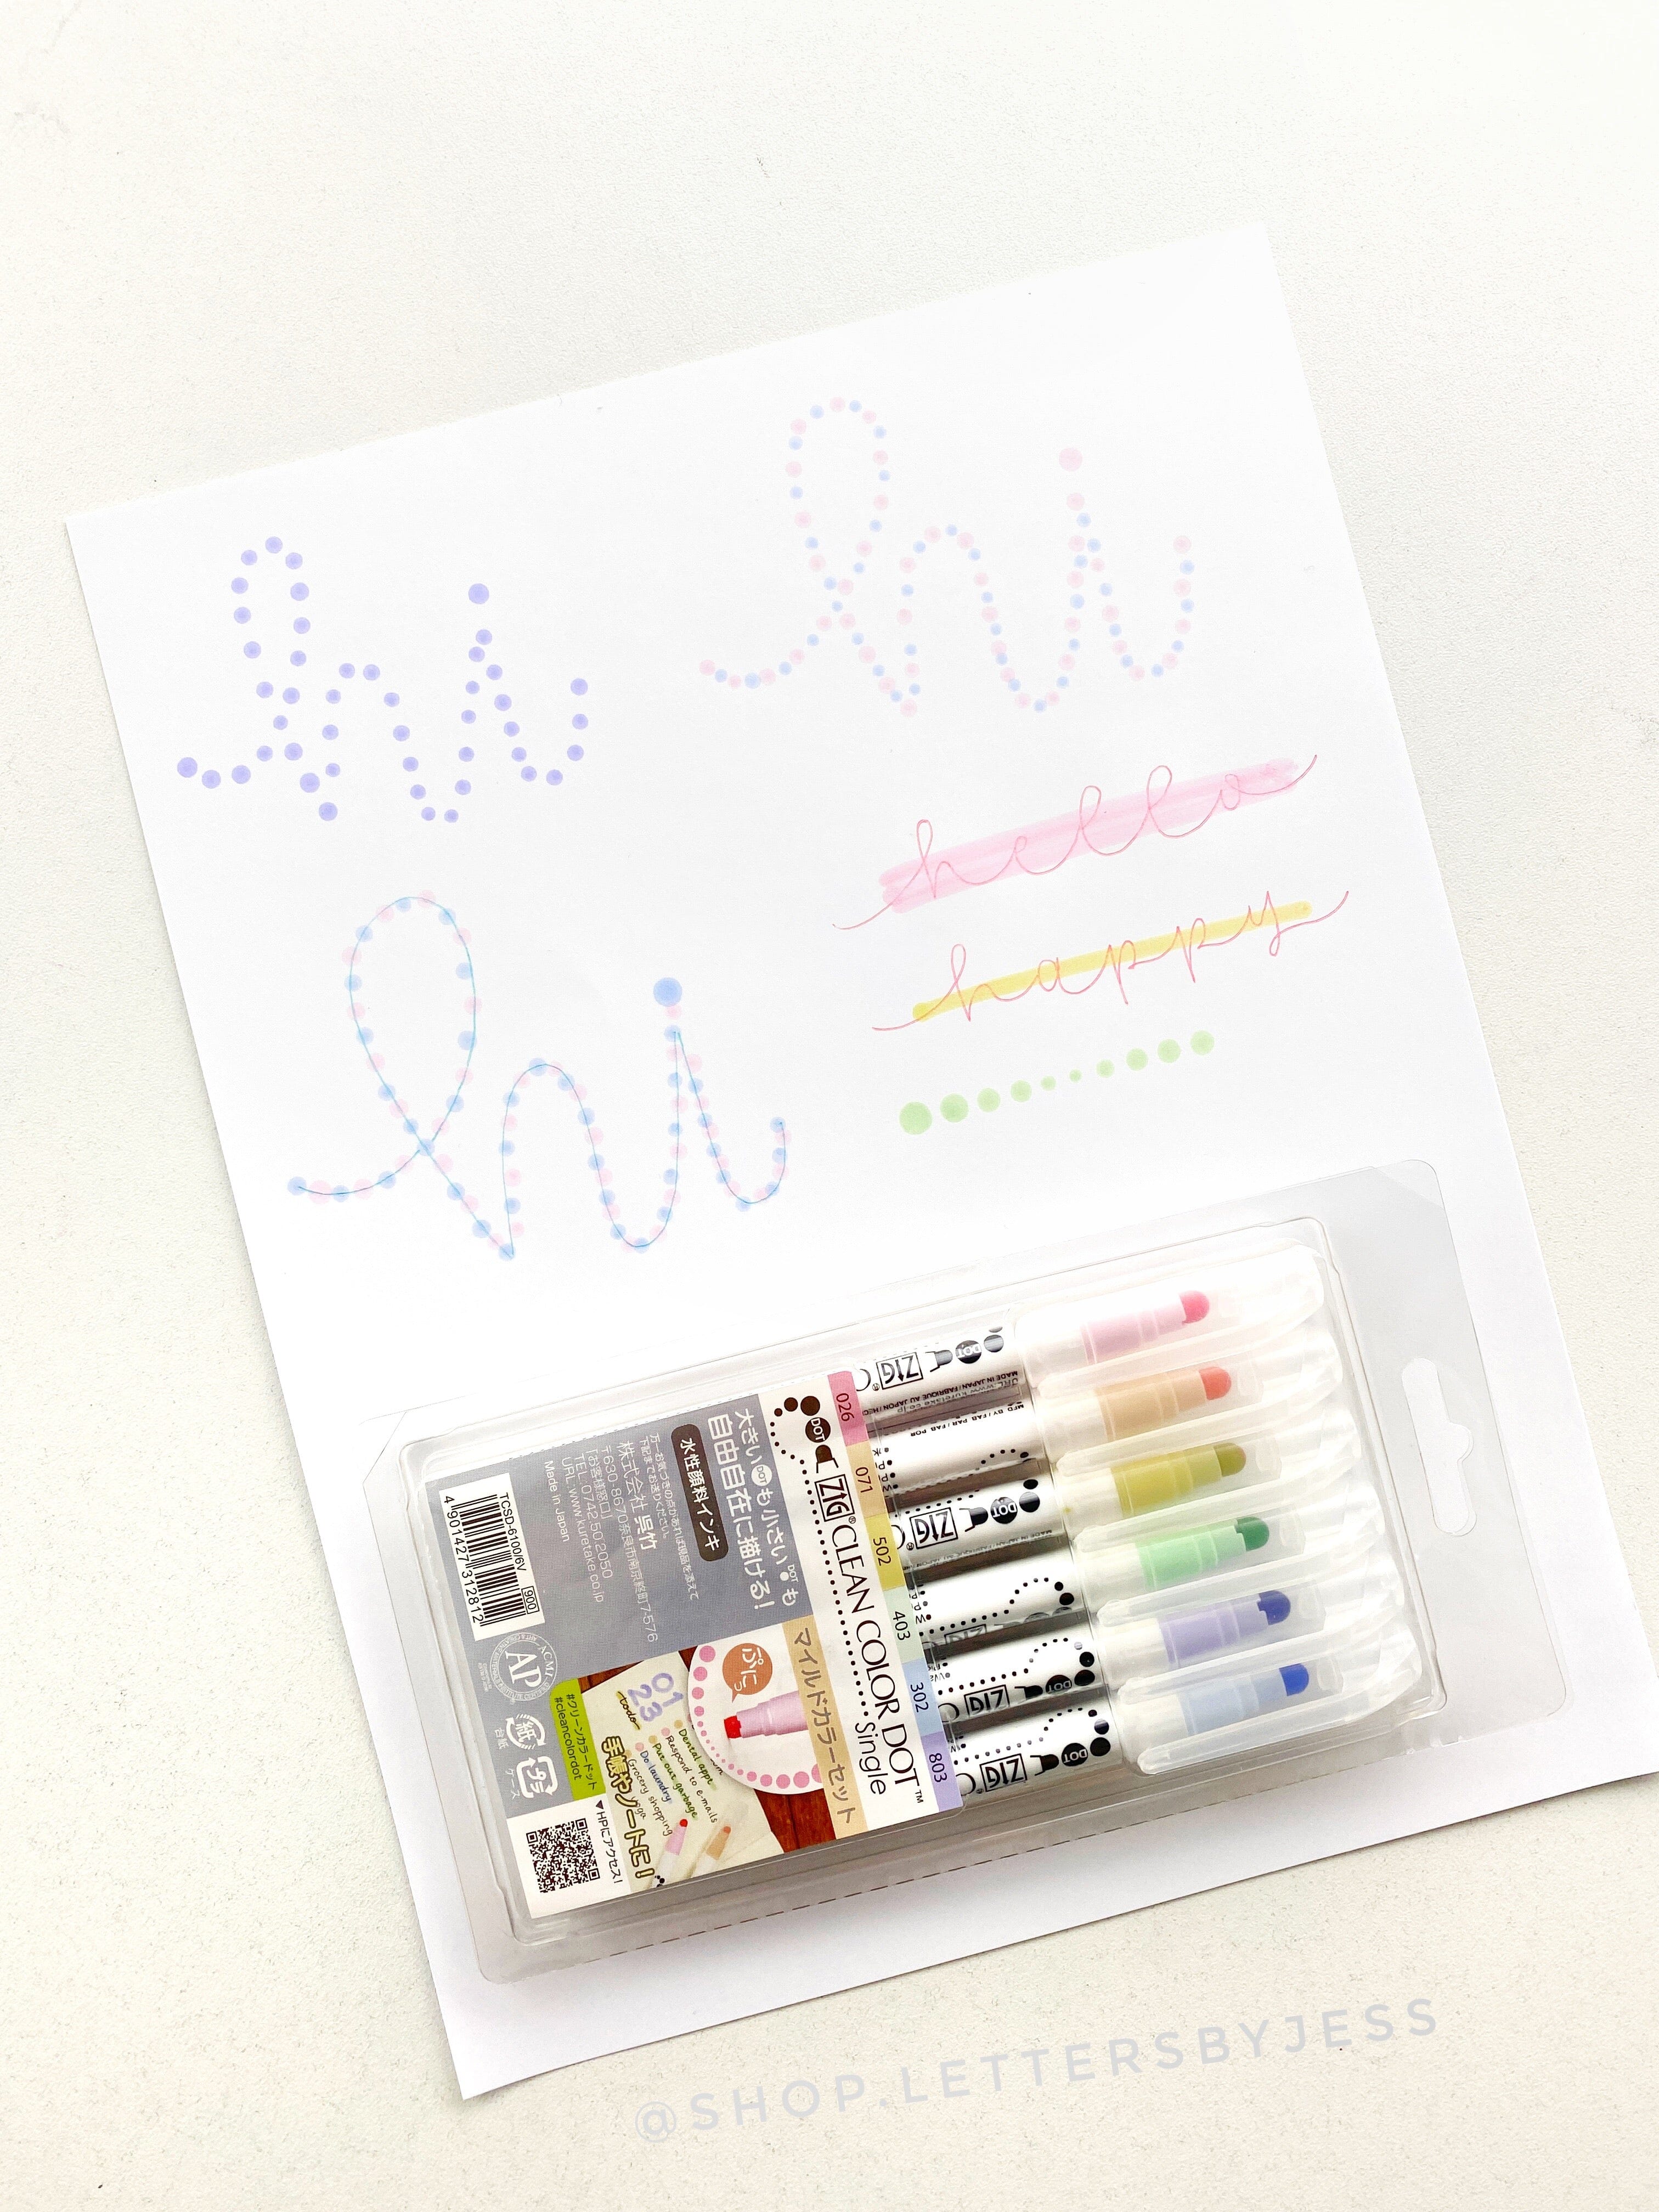 Kuretake Clean Color Dot x6 colores pasteles marcadores pincel lapicero Kuretake